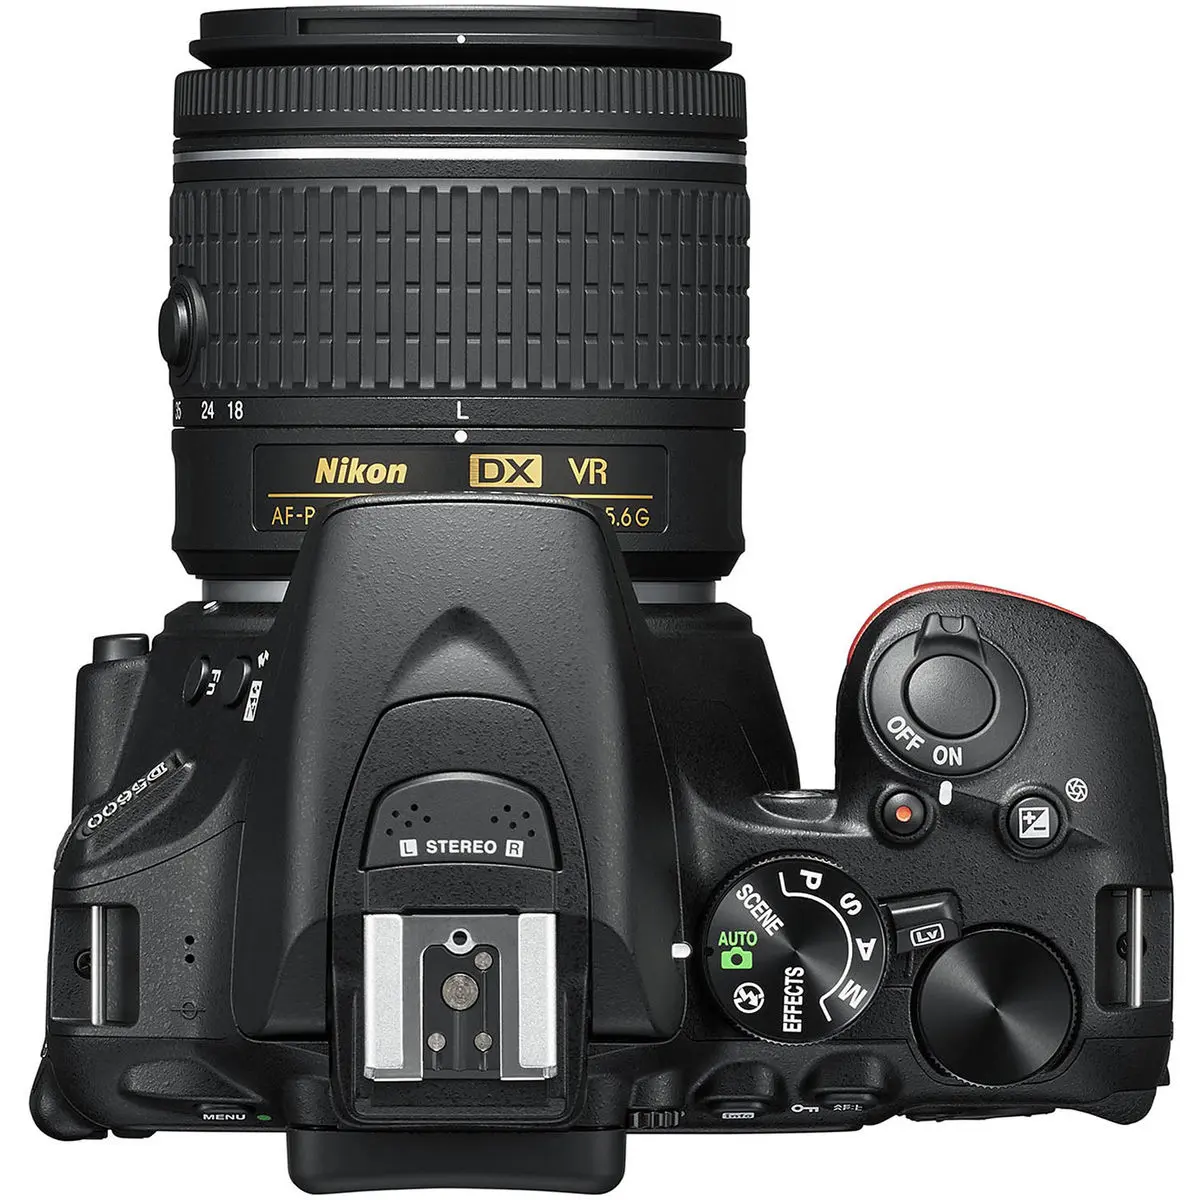 4. Nikon D5600 AF-P 18-55 VR Kit WiFi NFC FullHD 24.2MP Camera Black